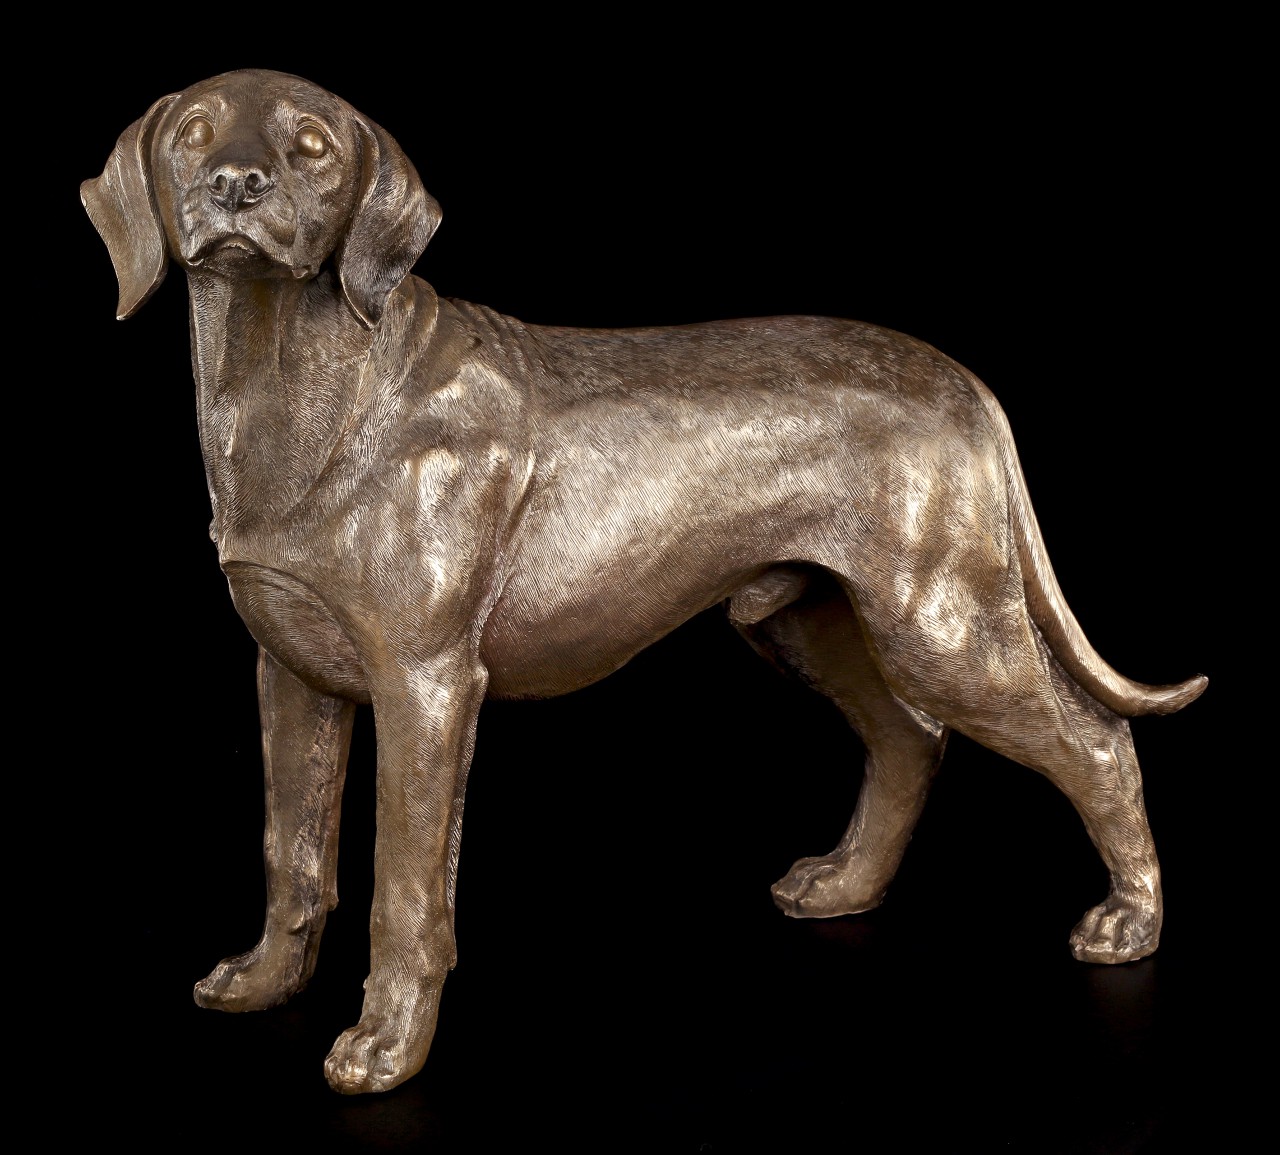 Large Dog Figurine - Young Labrador standing